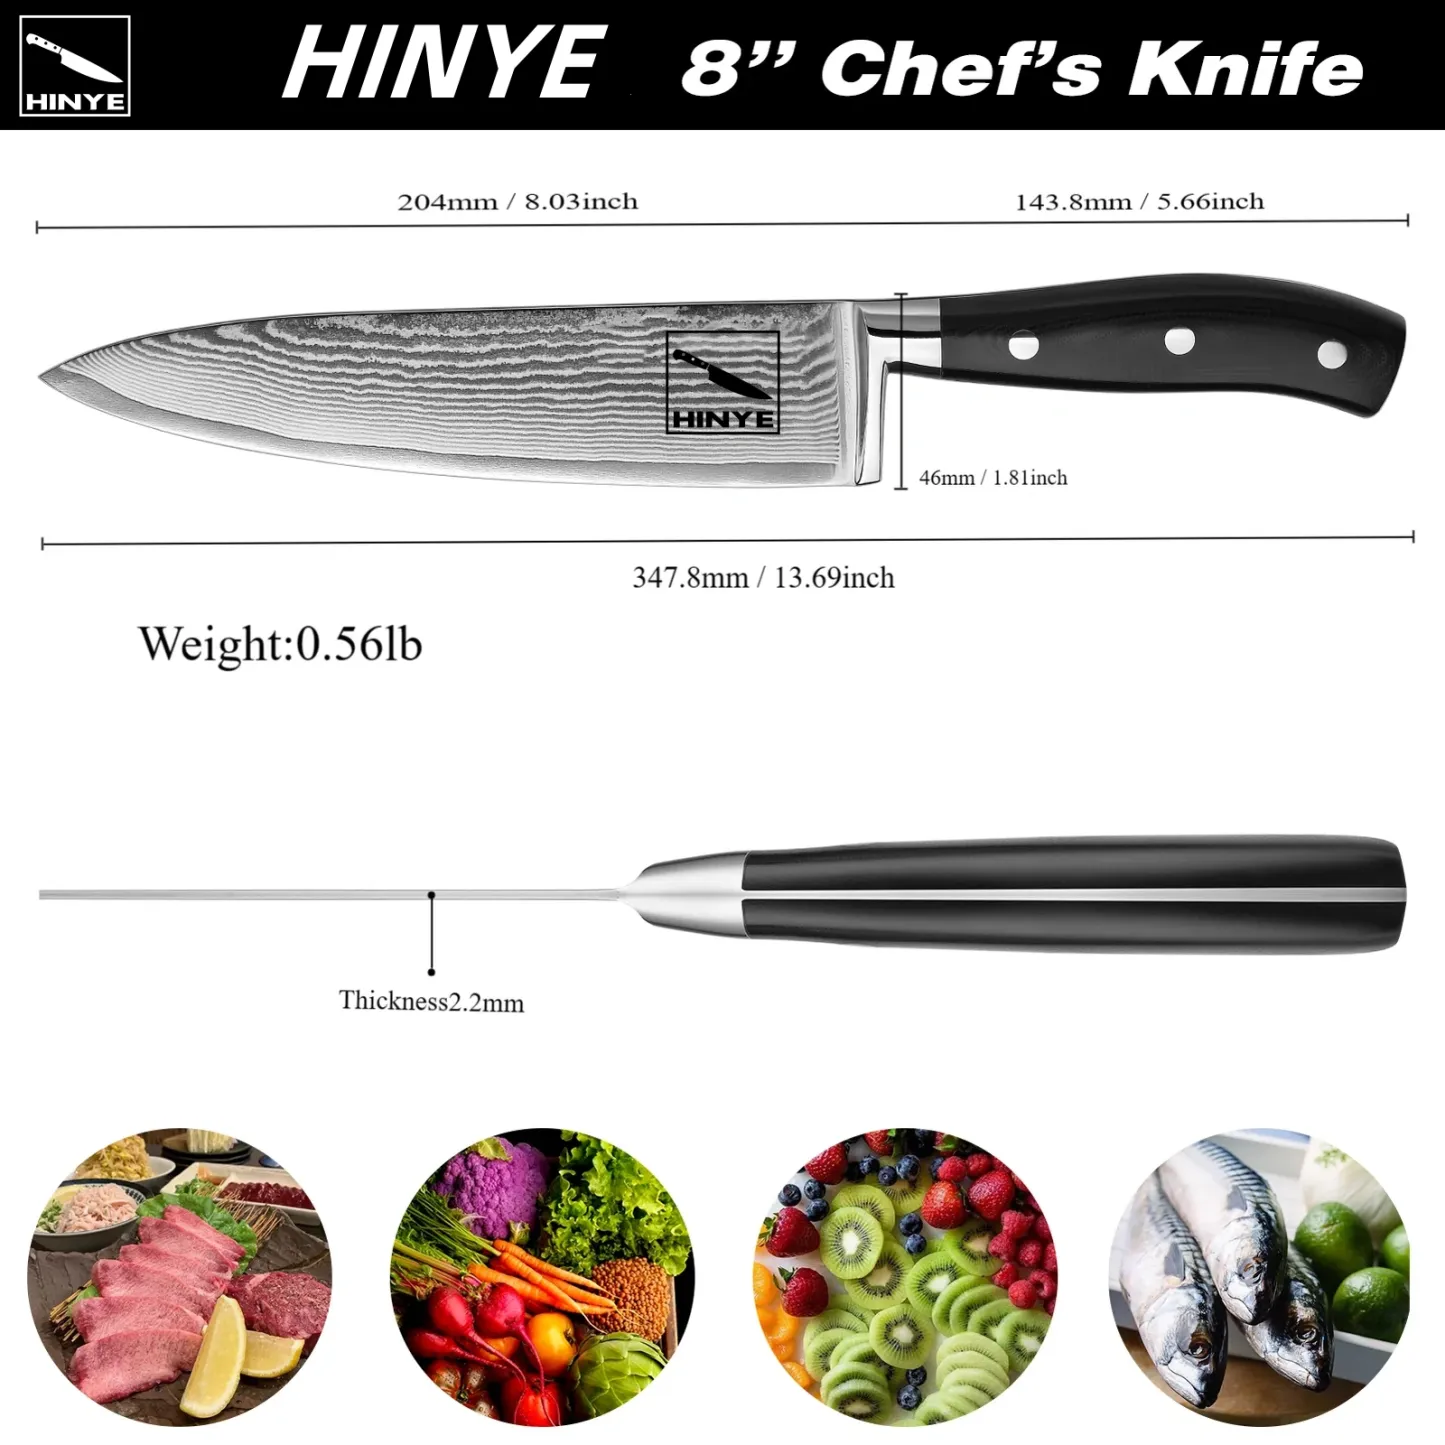 Hinye-Argos 8" Chef